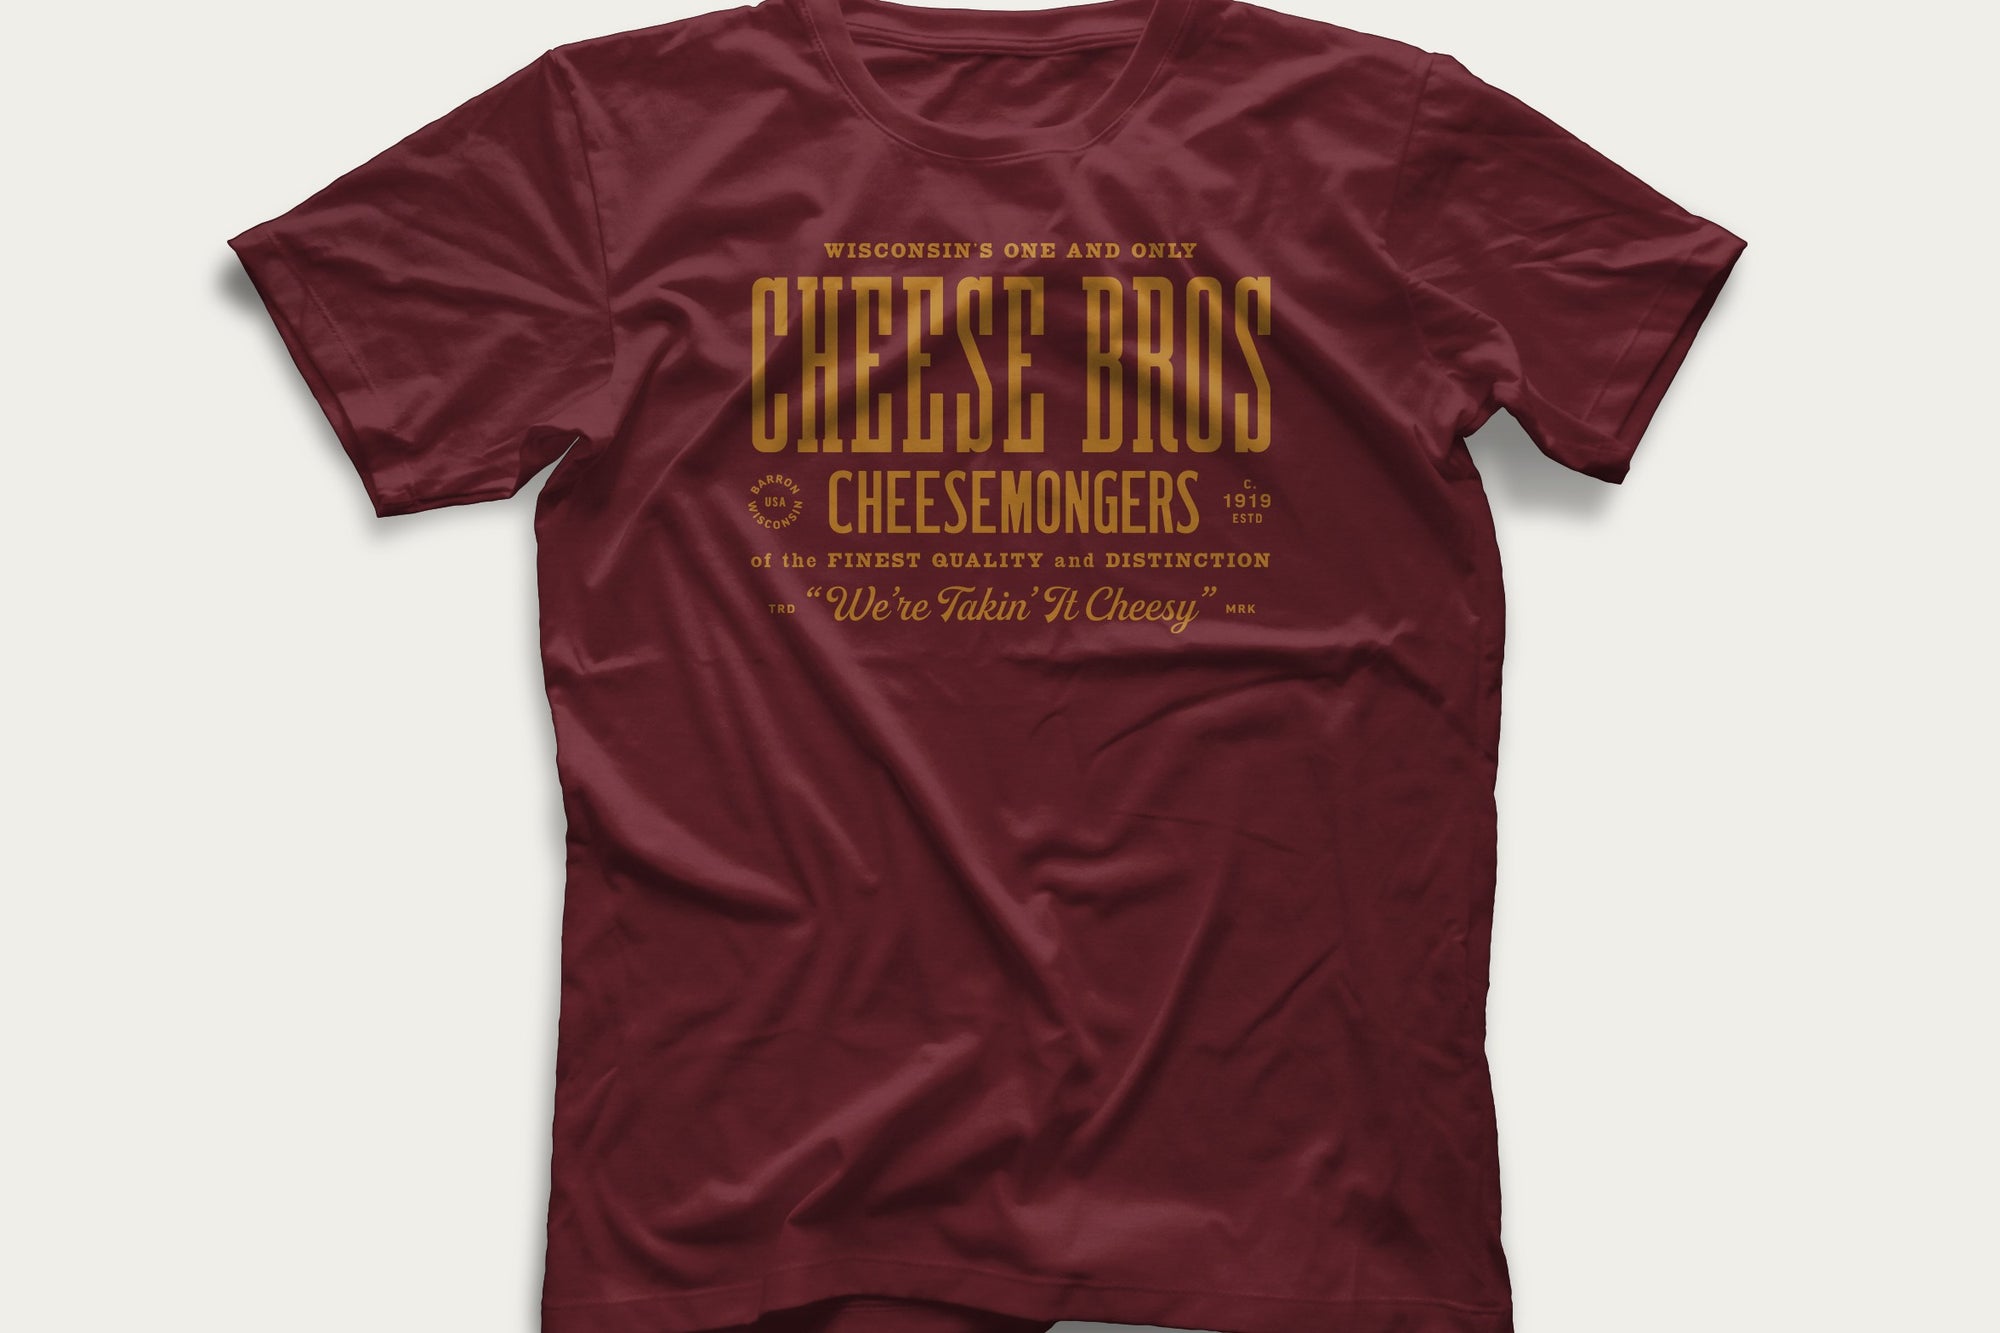 Red Cheese Bros Cheese Mongers t-shirt.